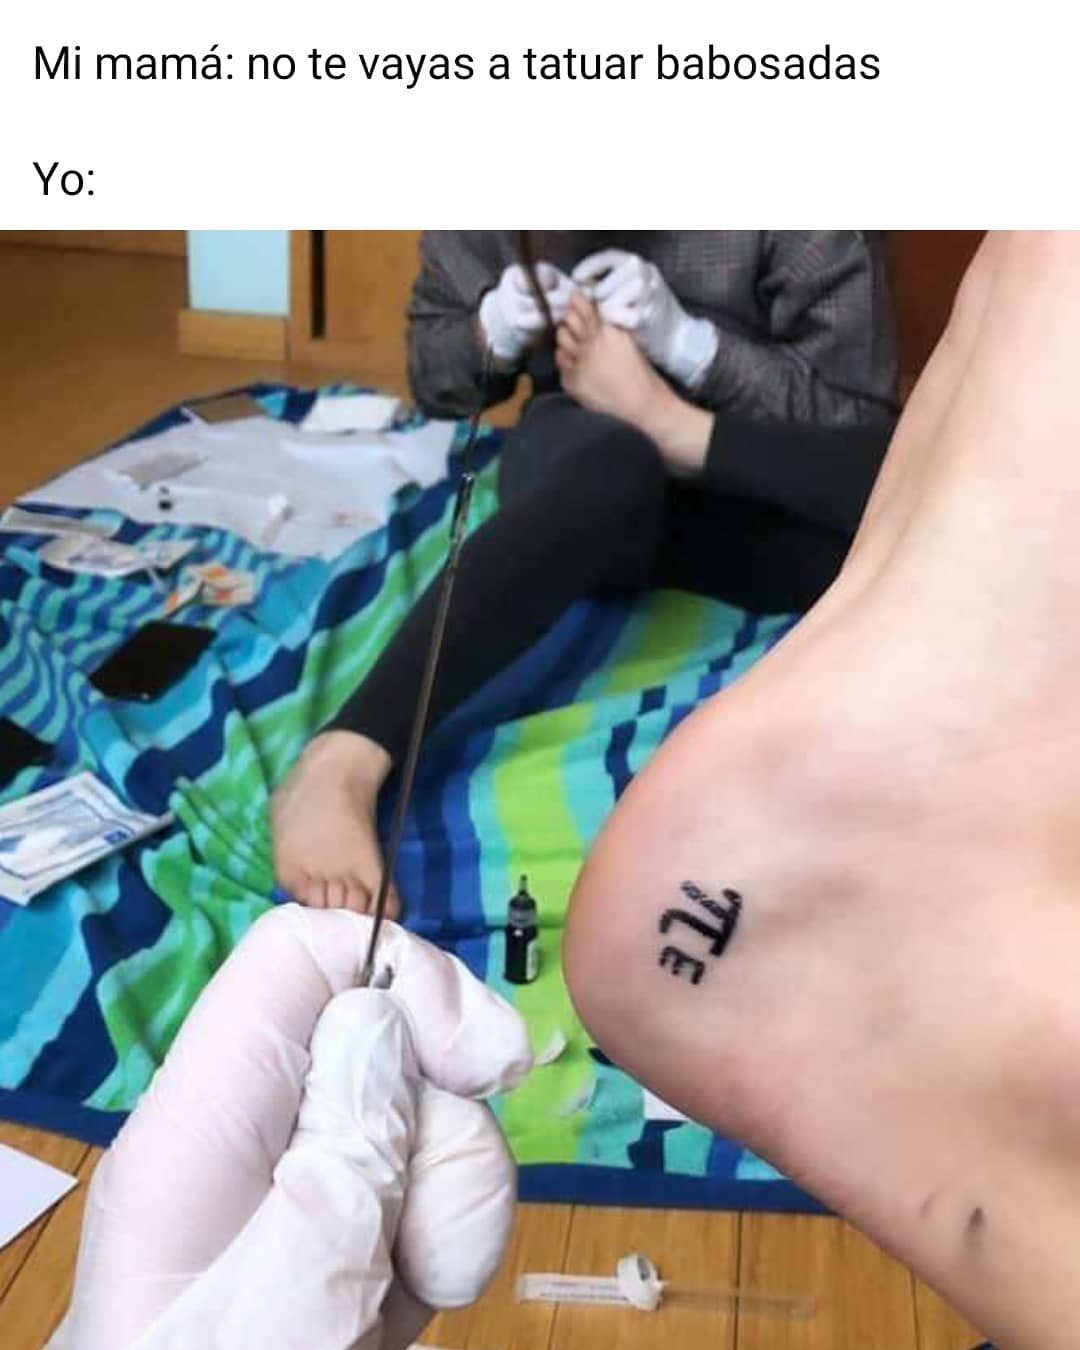 Mi mamá: No te vayas a tatuar babosadas.  Yo: